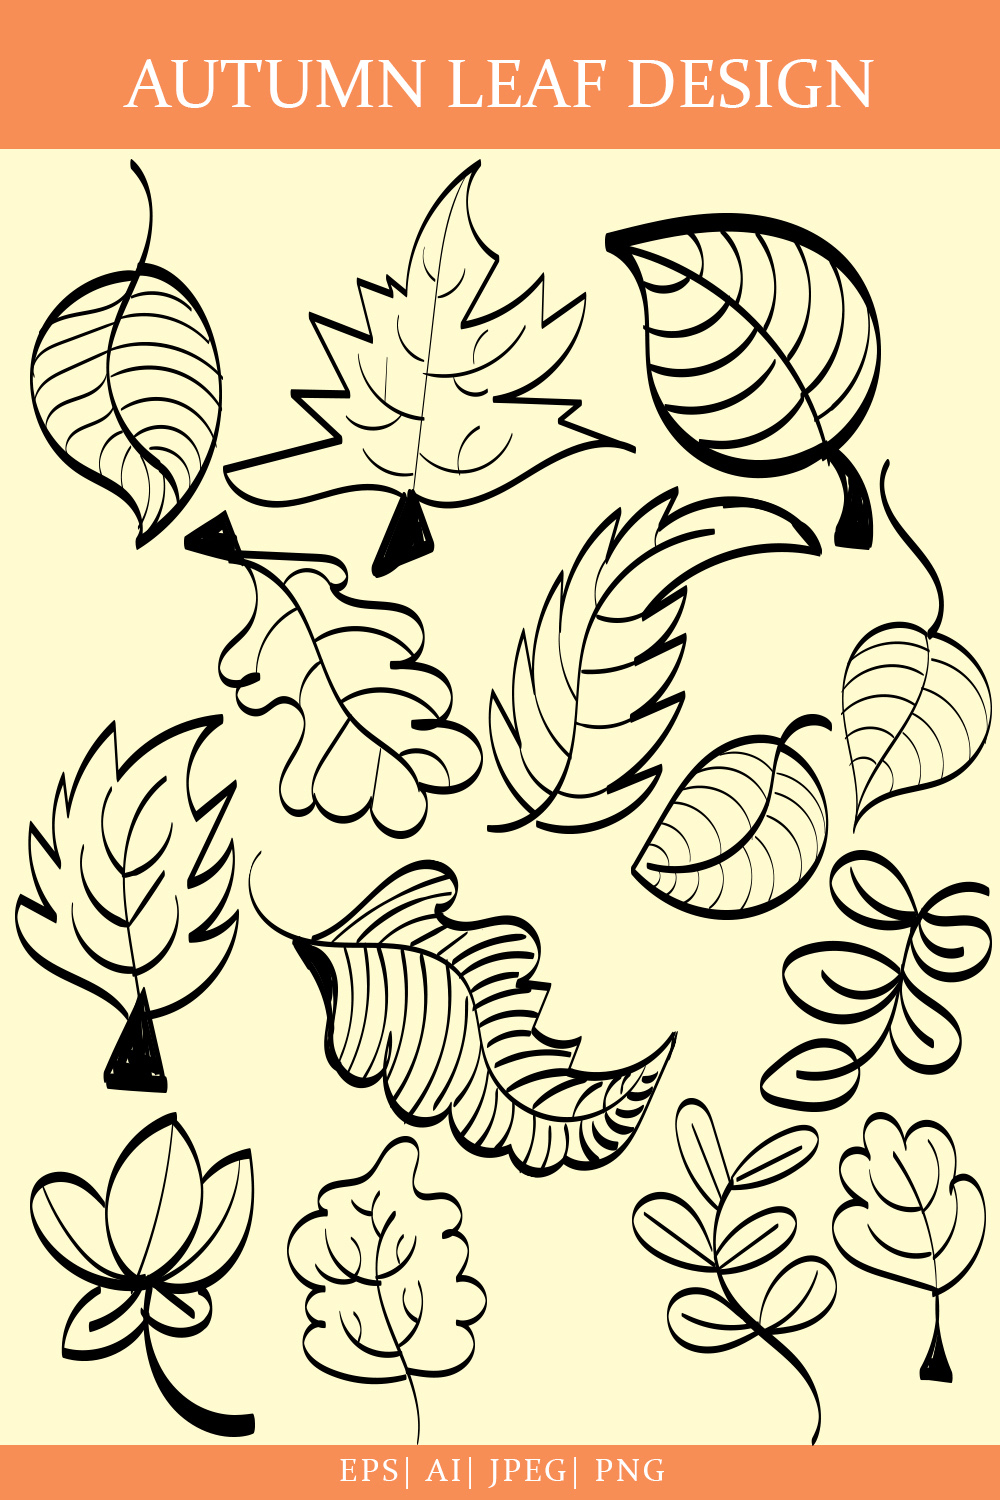 14 Autumn Leaves Design Pinterest collage image.